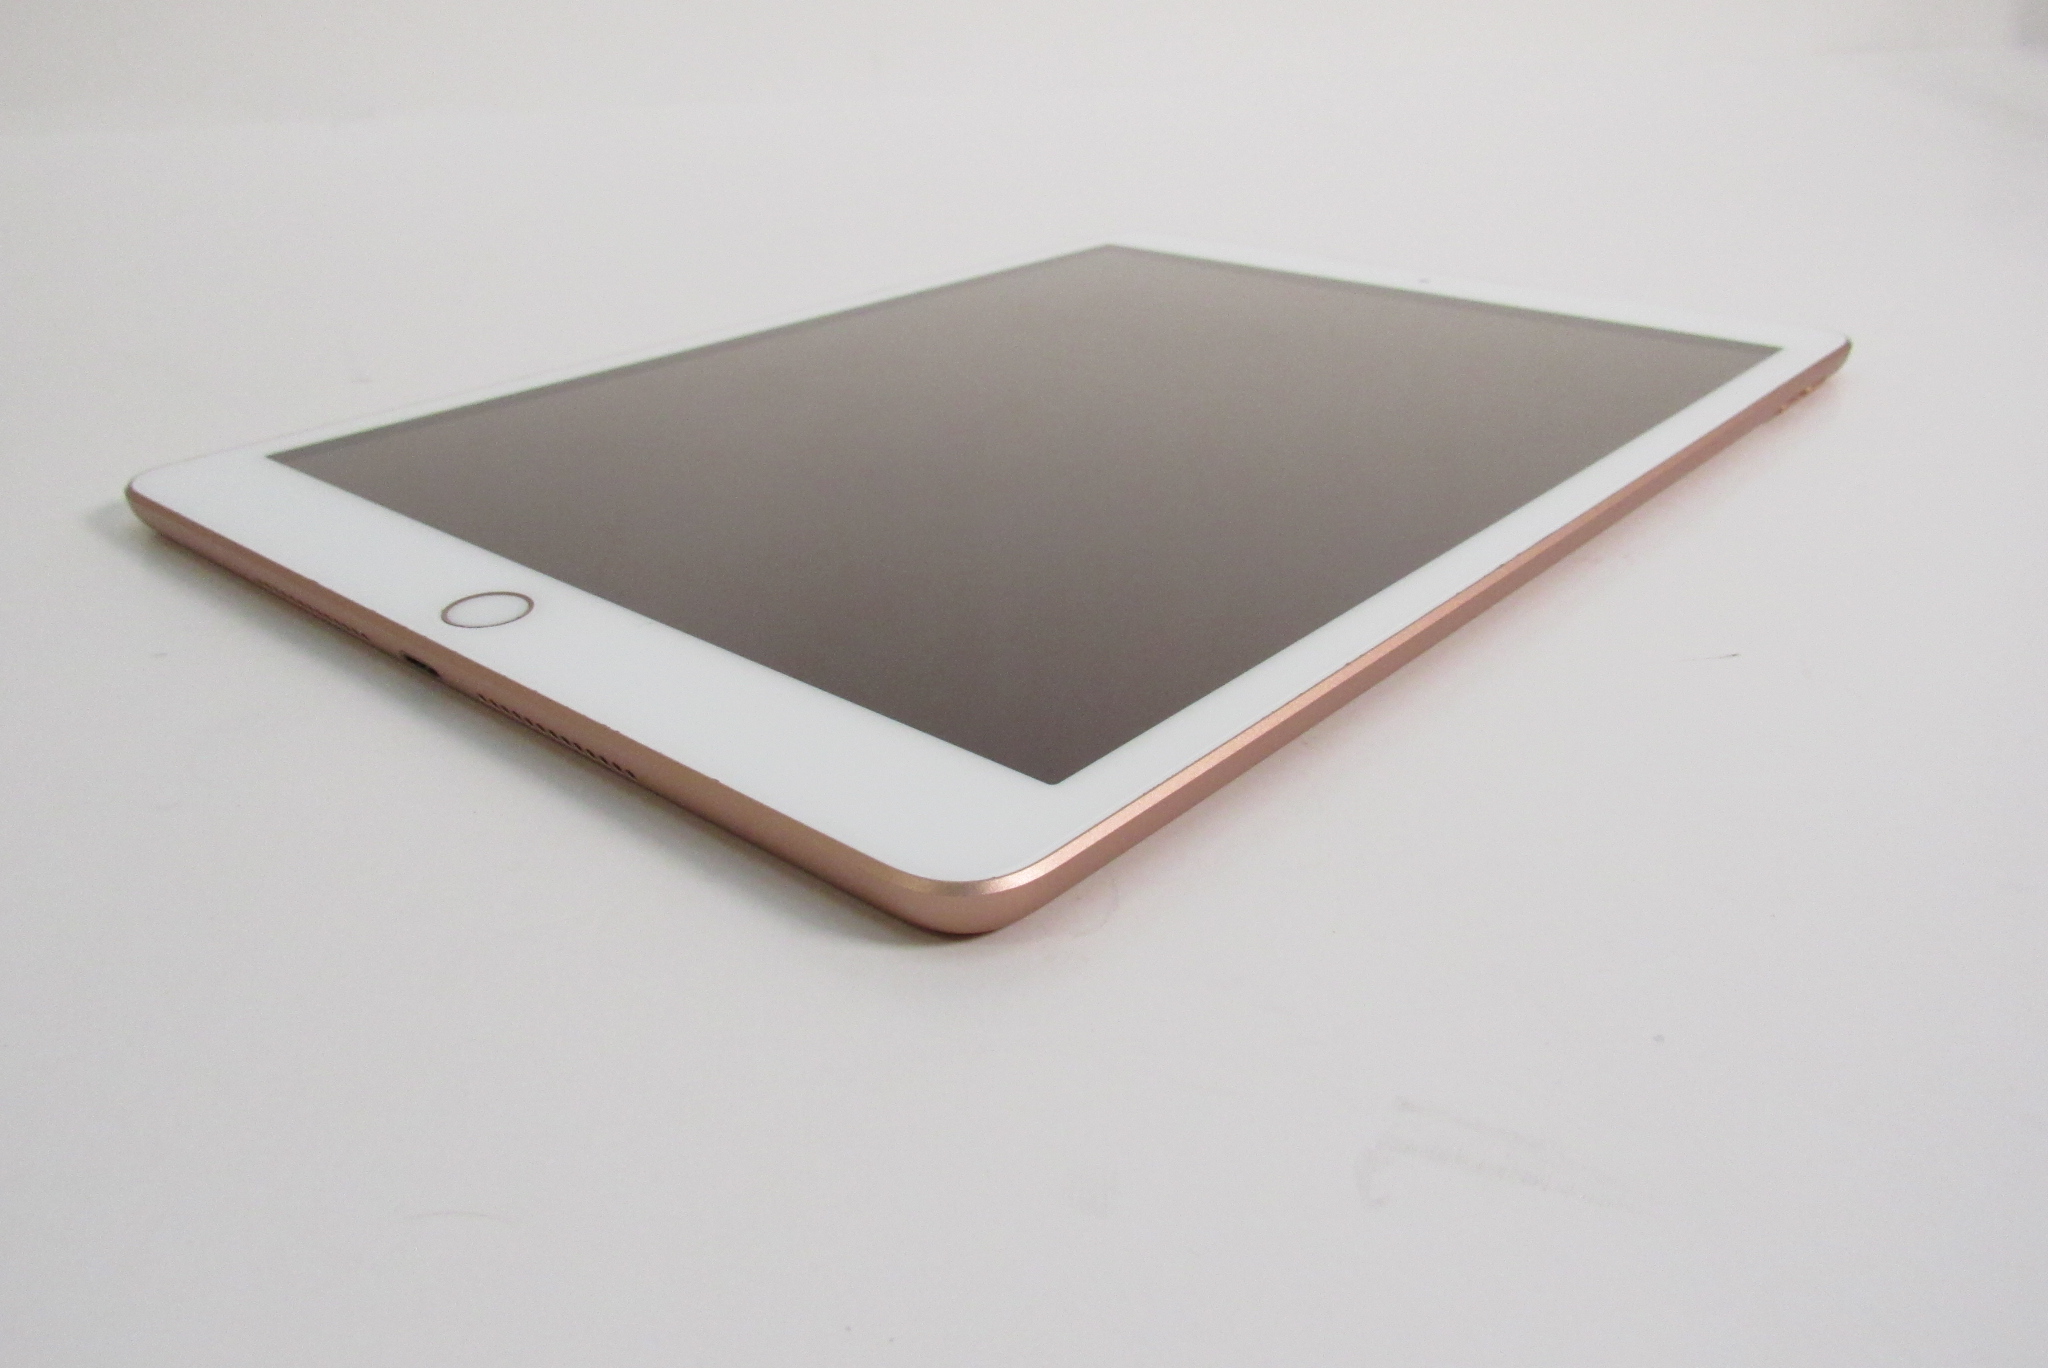 Apple iPad 7th Generation NW762LL/A 32GB 10.2'' Wi-Fi Tablet - Gold